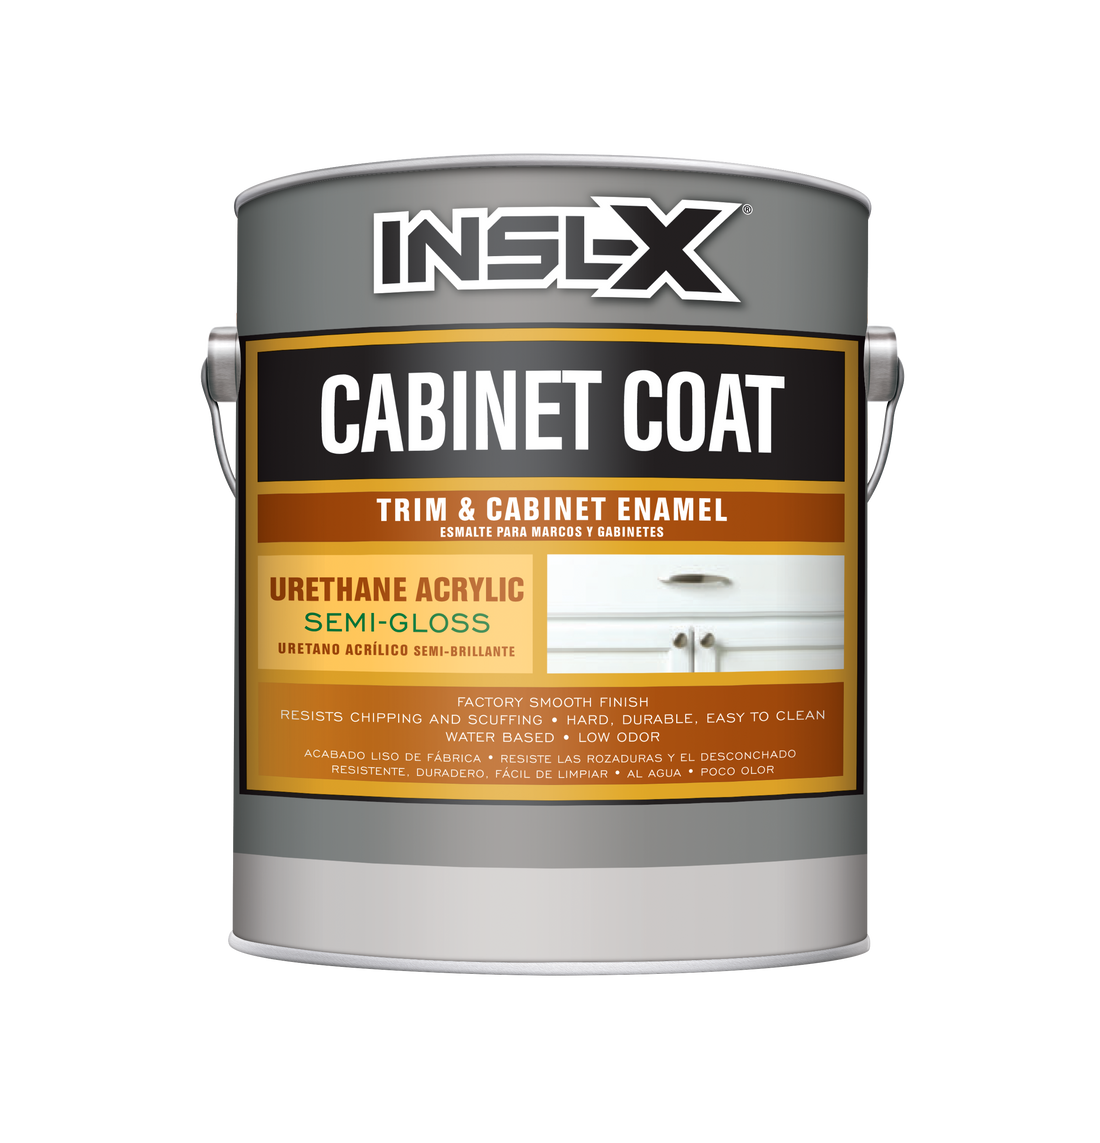 INSL-X Cabinet Coat - Semi-Gloss Finish